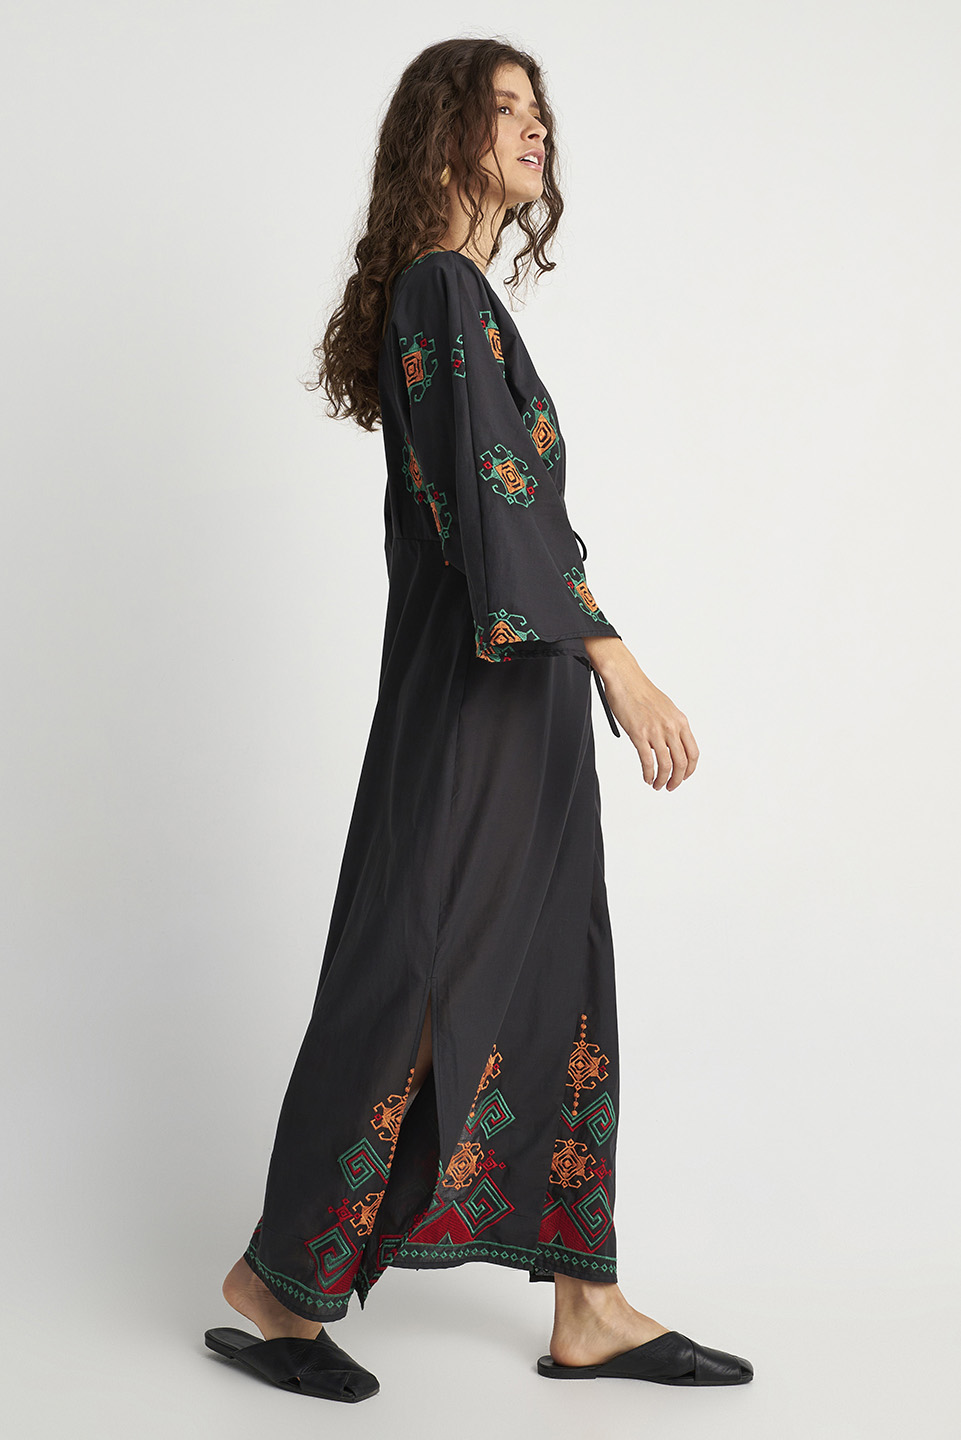 Image Embroidered jurk midi zwart